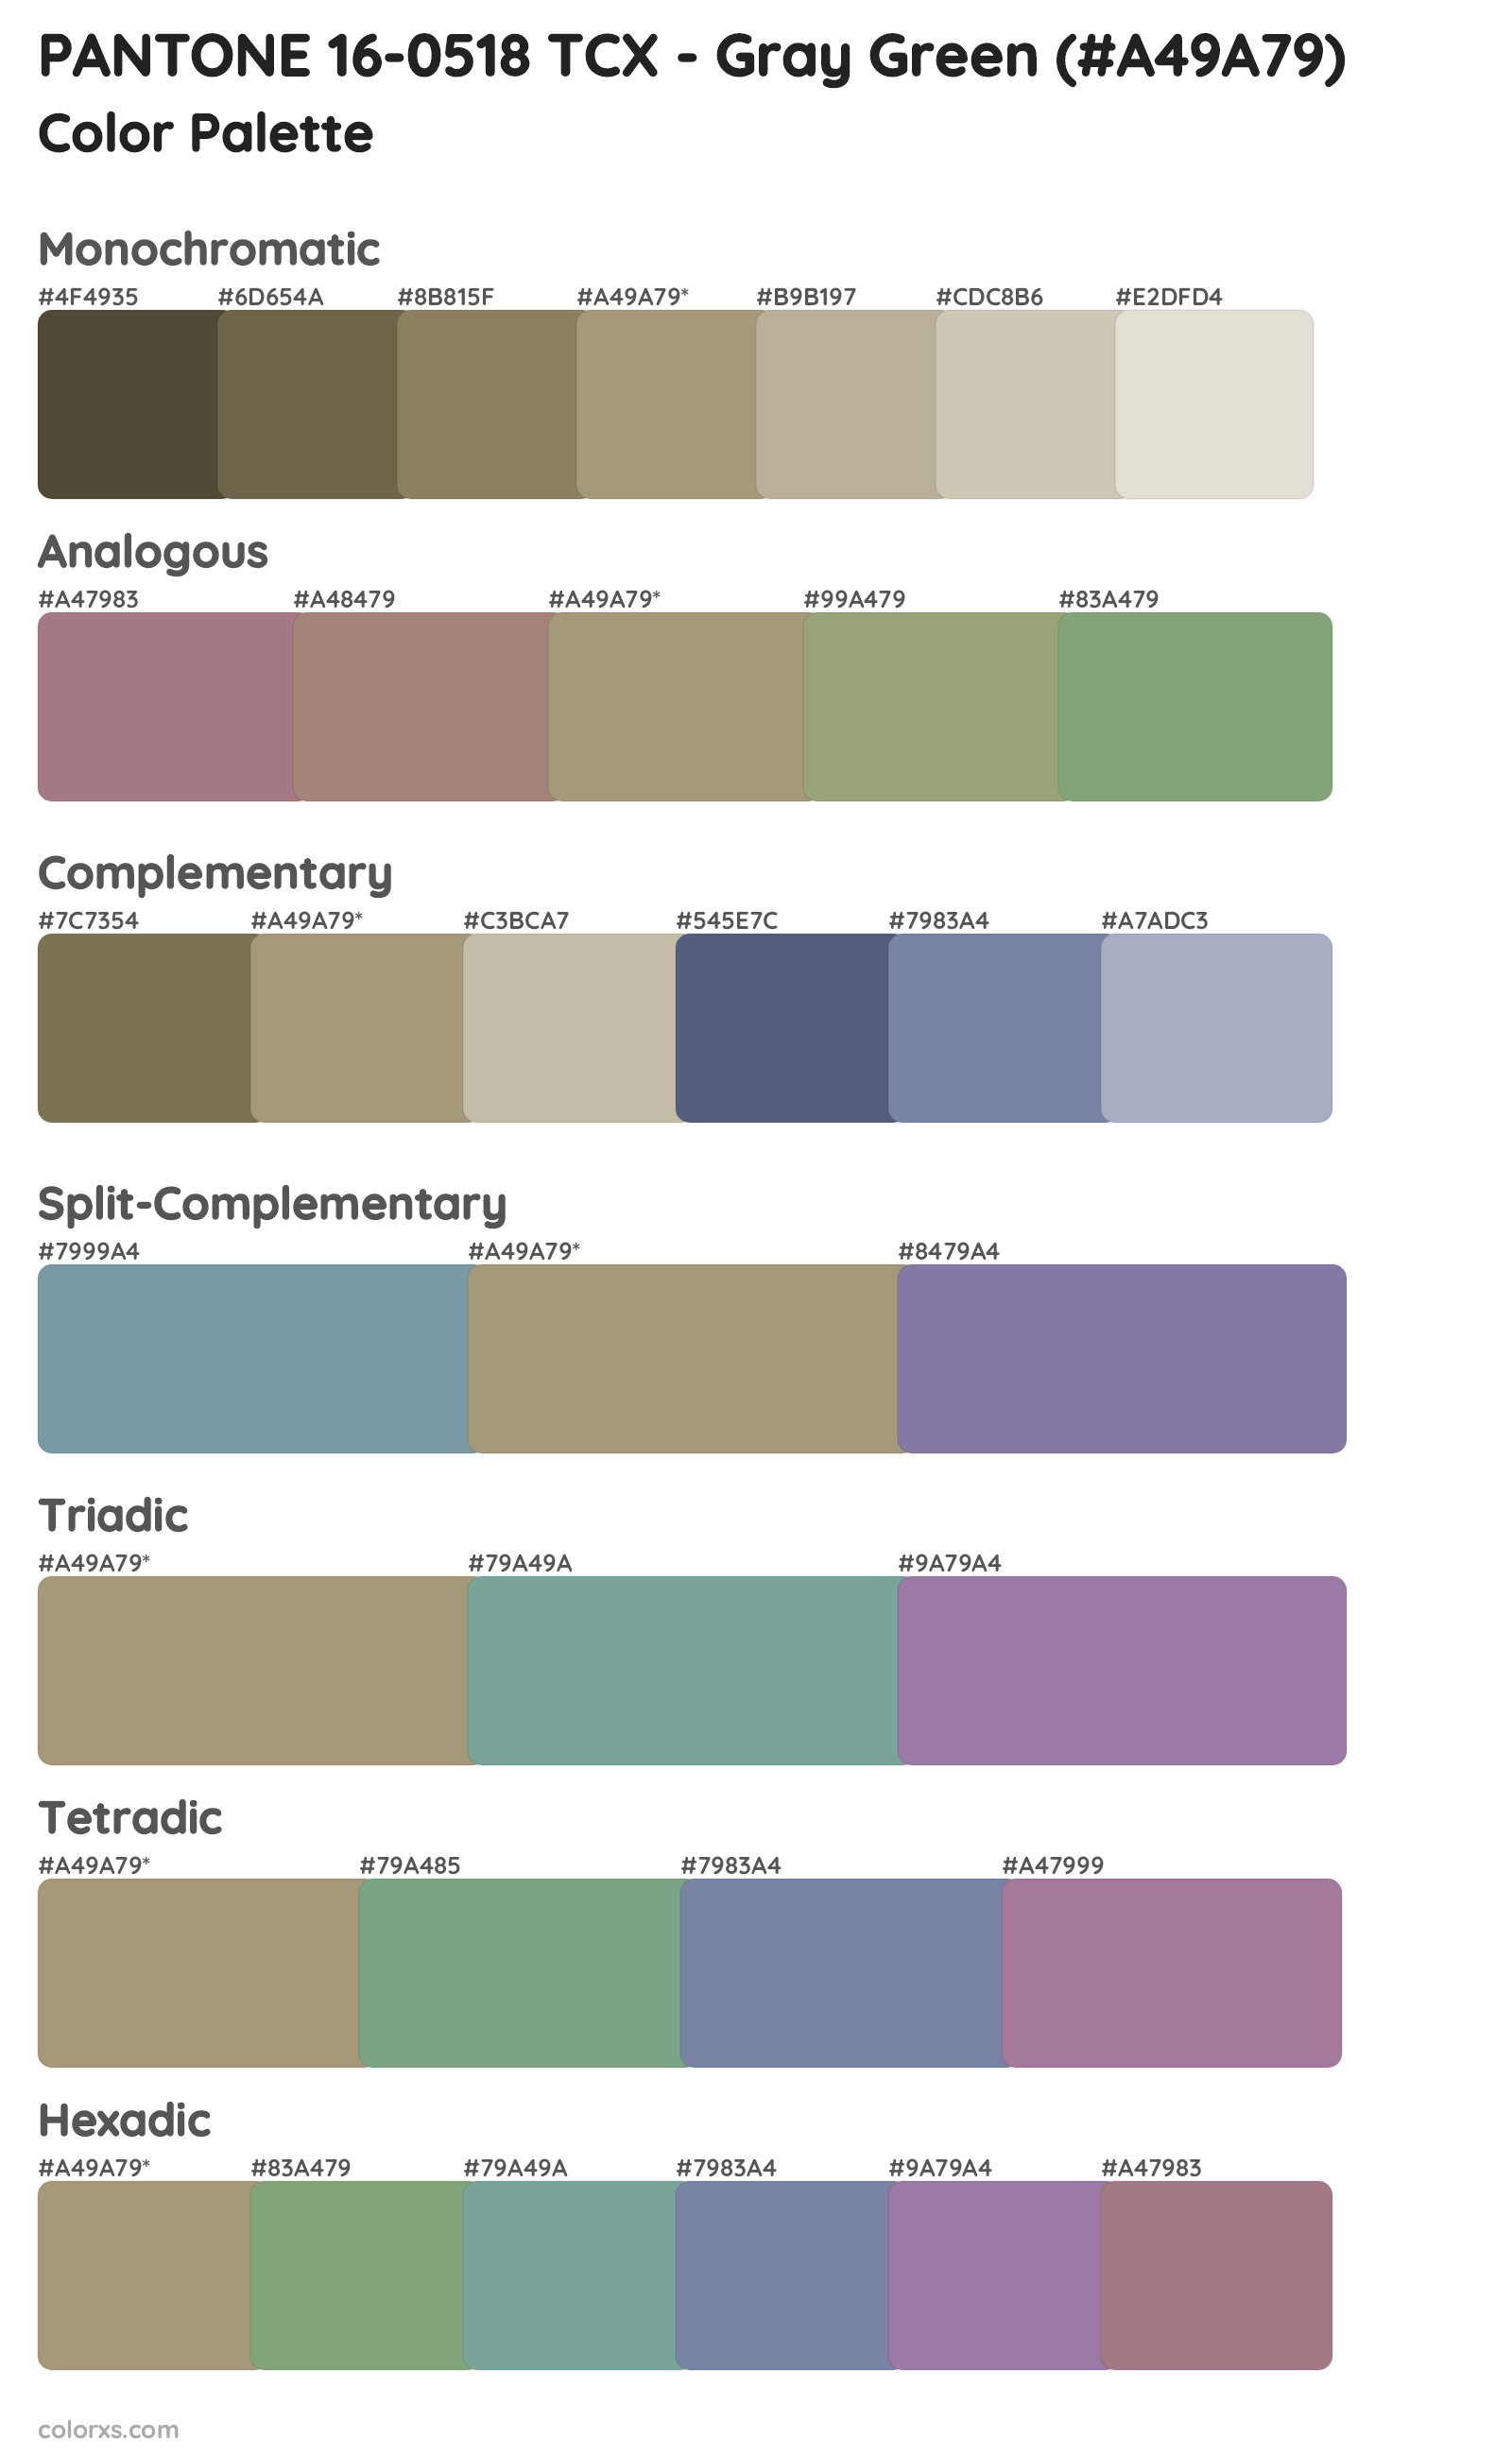 PANTONE 16-0518 TCX - Gray Green Color Scheme Palettes